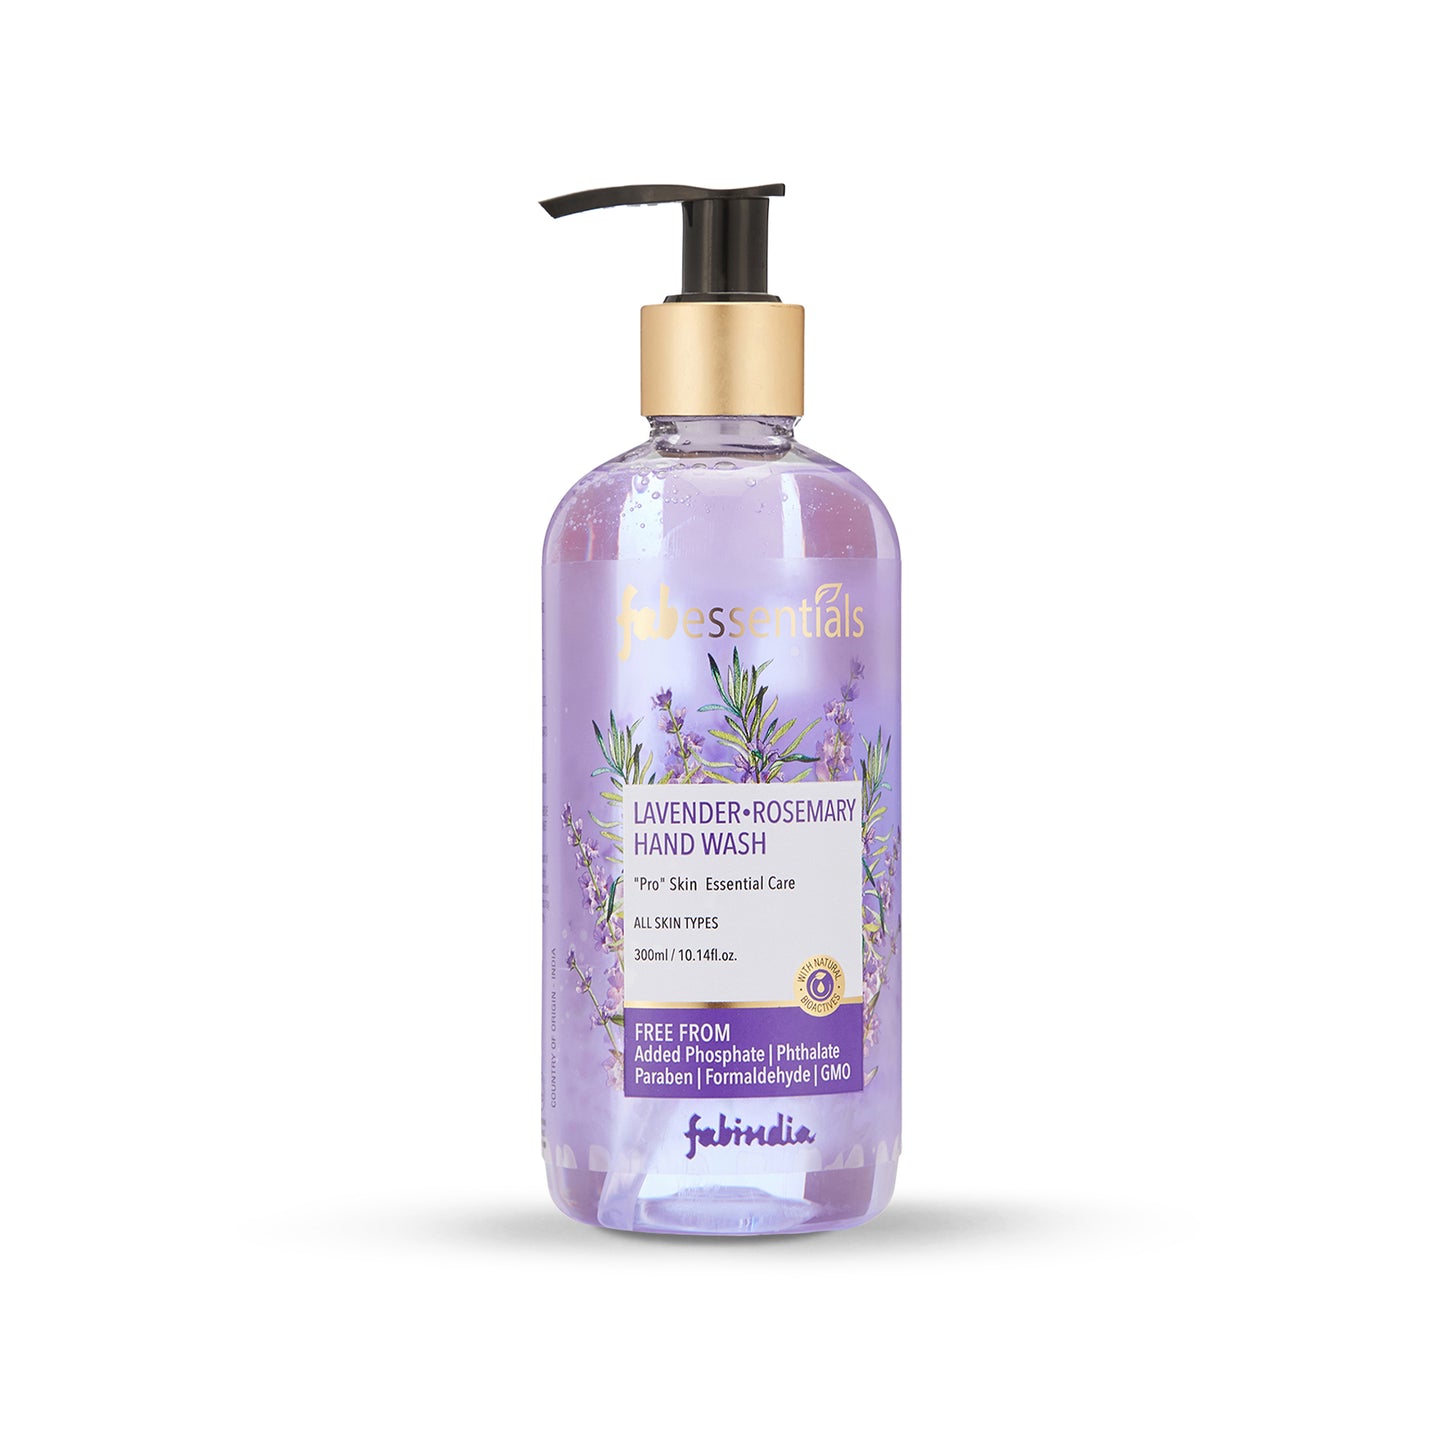 Fabessentials Lavender Rosemary Hand Wash, 300ml